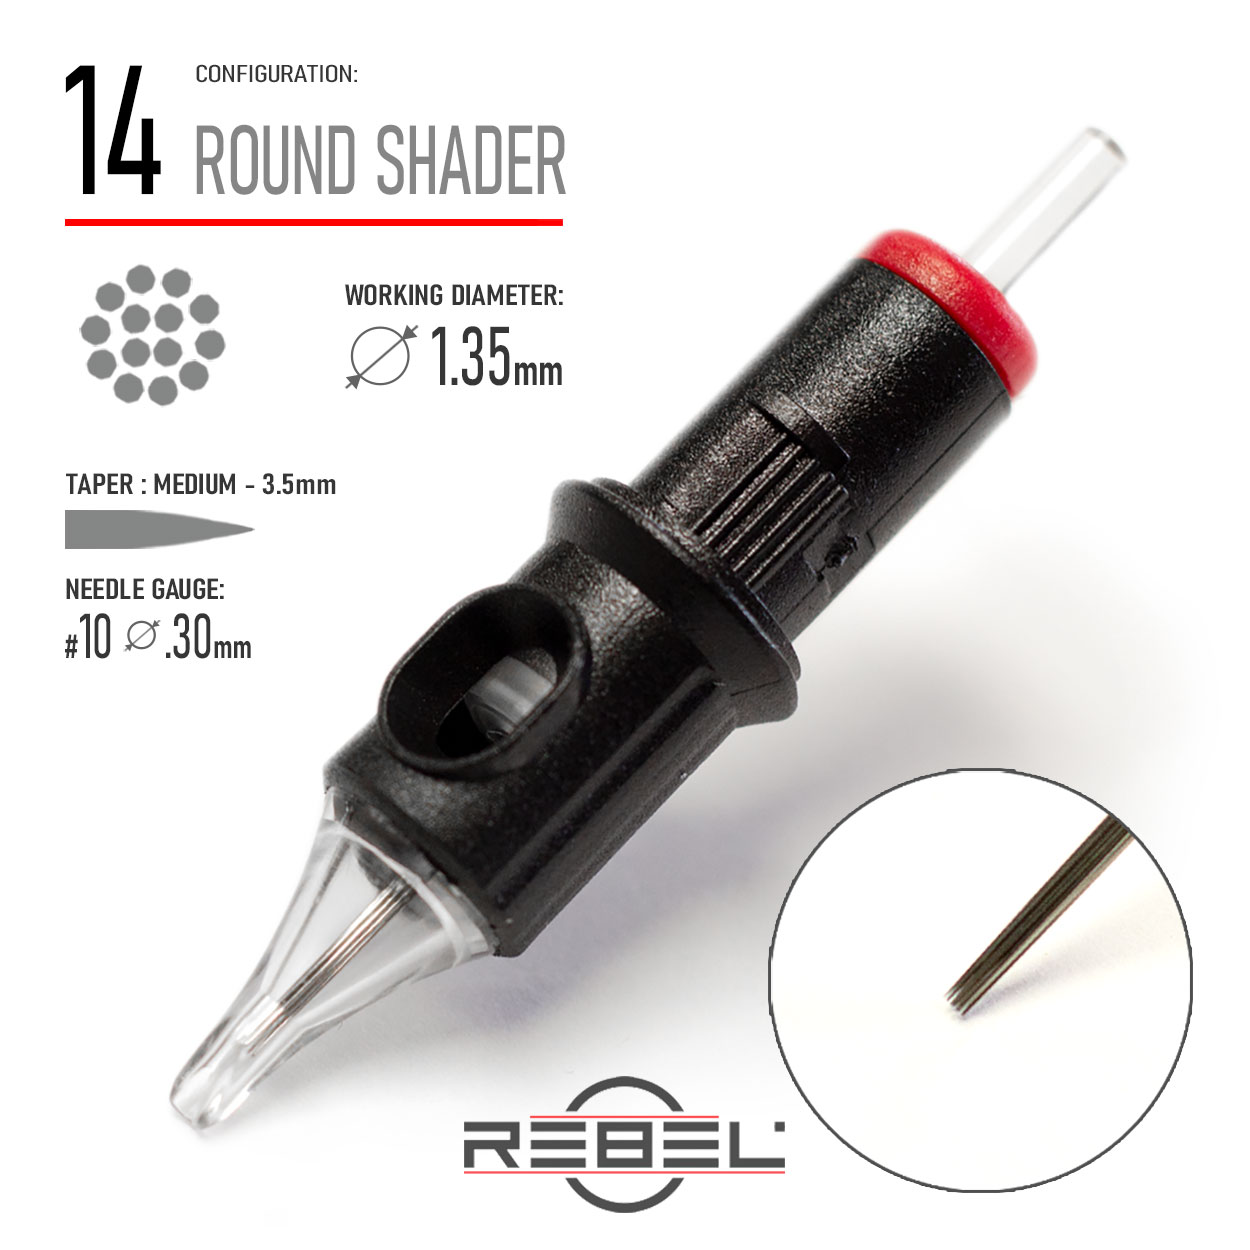 ROUND 11 Shader - Precision Tattoo Cartridge - Needle - REBEL